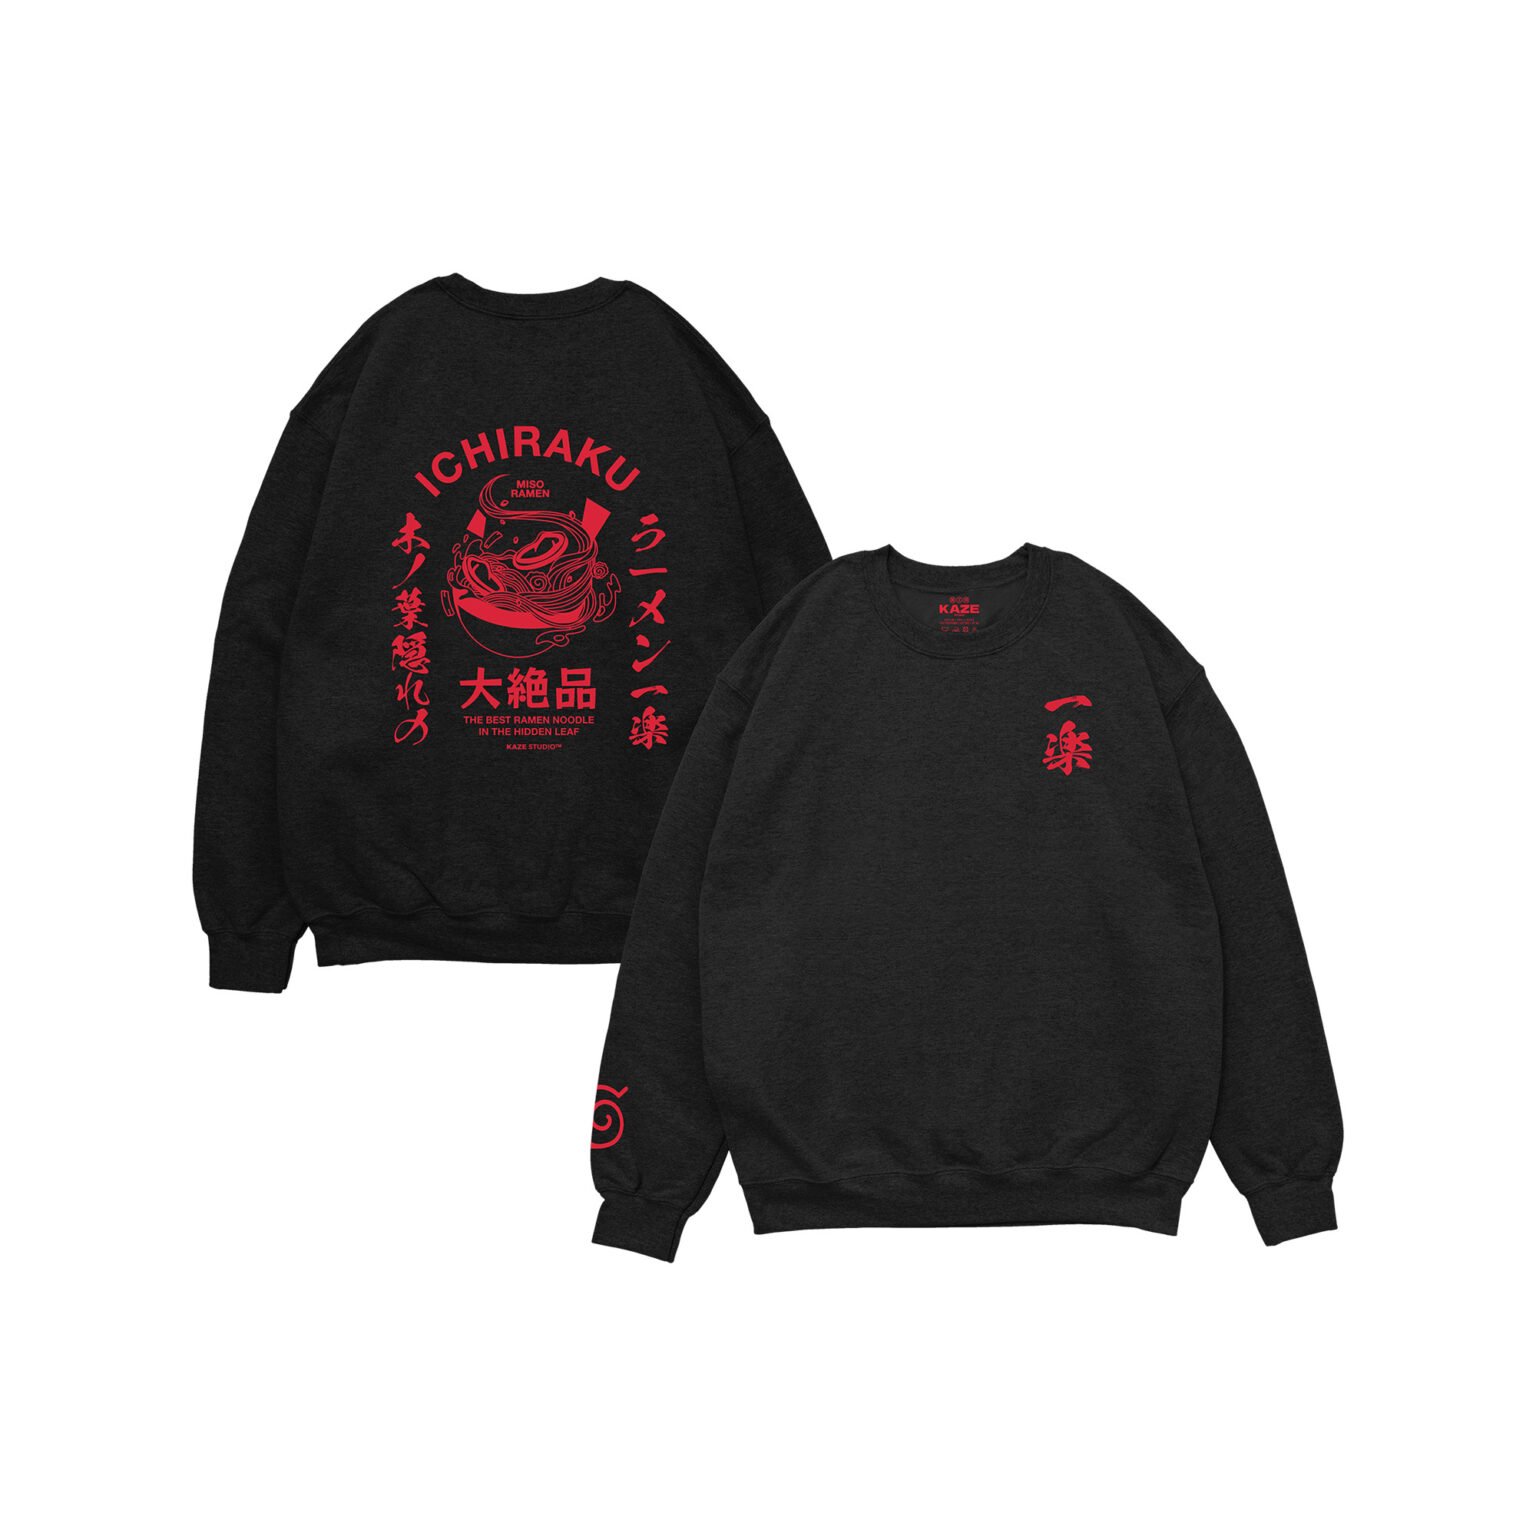 Naruto Sweater  "Miso Ramen" IDR. 490.000  IDR. 190.000 /   $49.00 $19.00